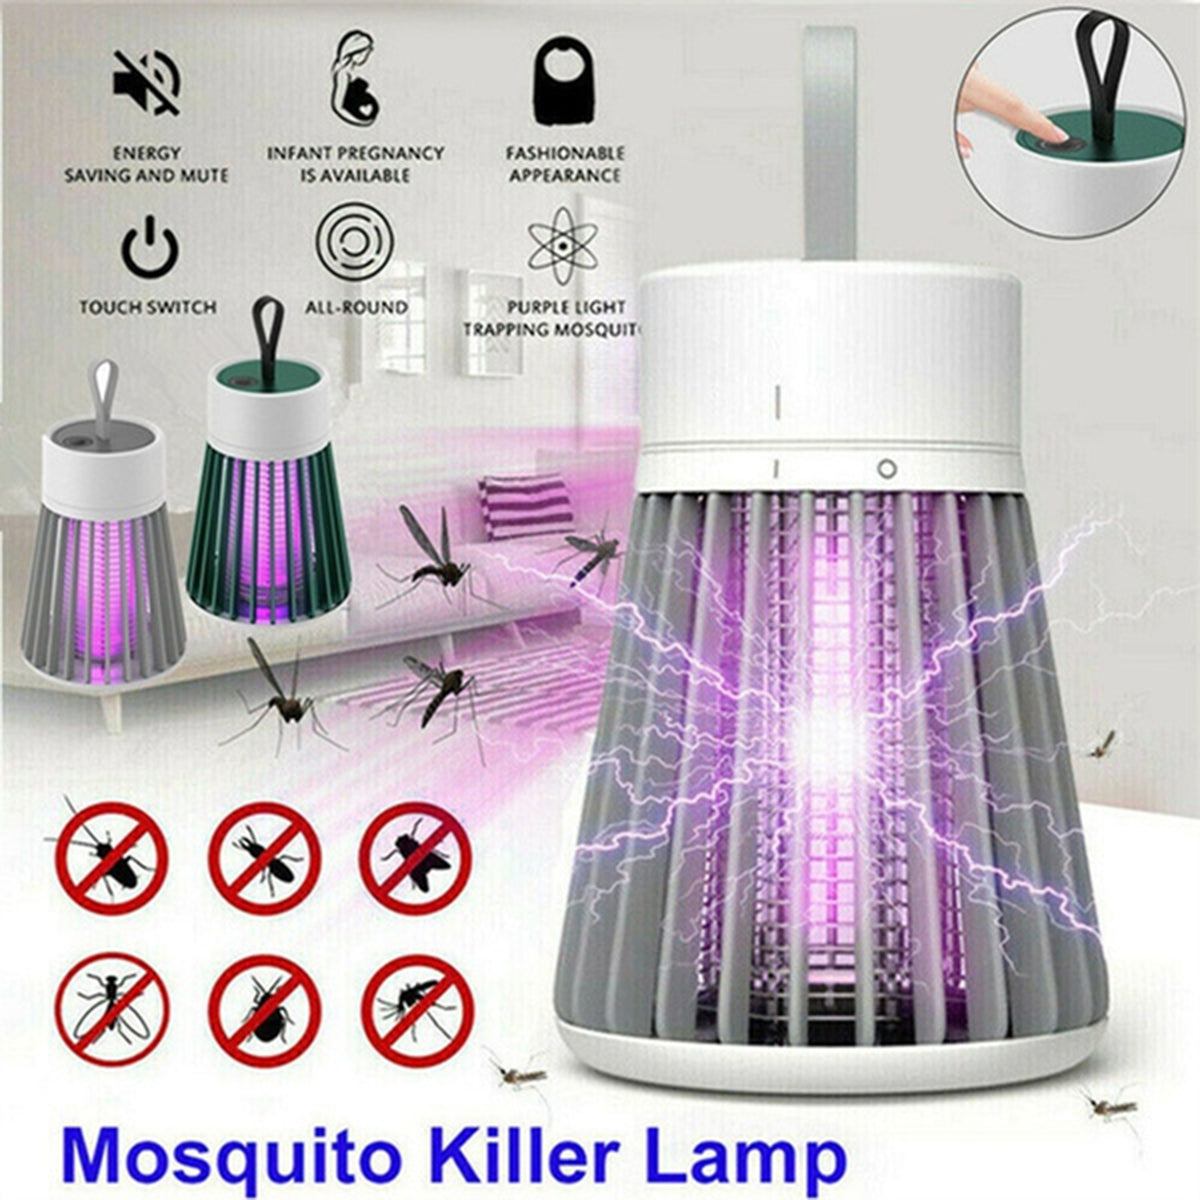 Electric-shock Mosquito Killer Lamp